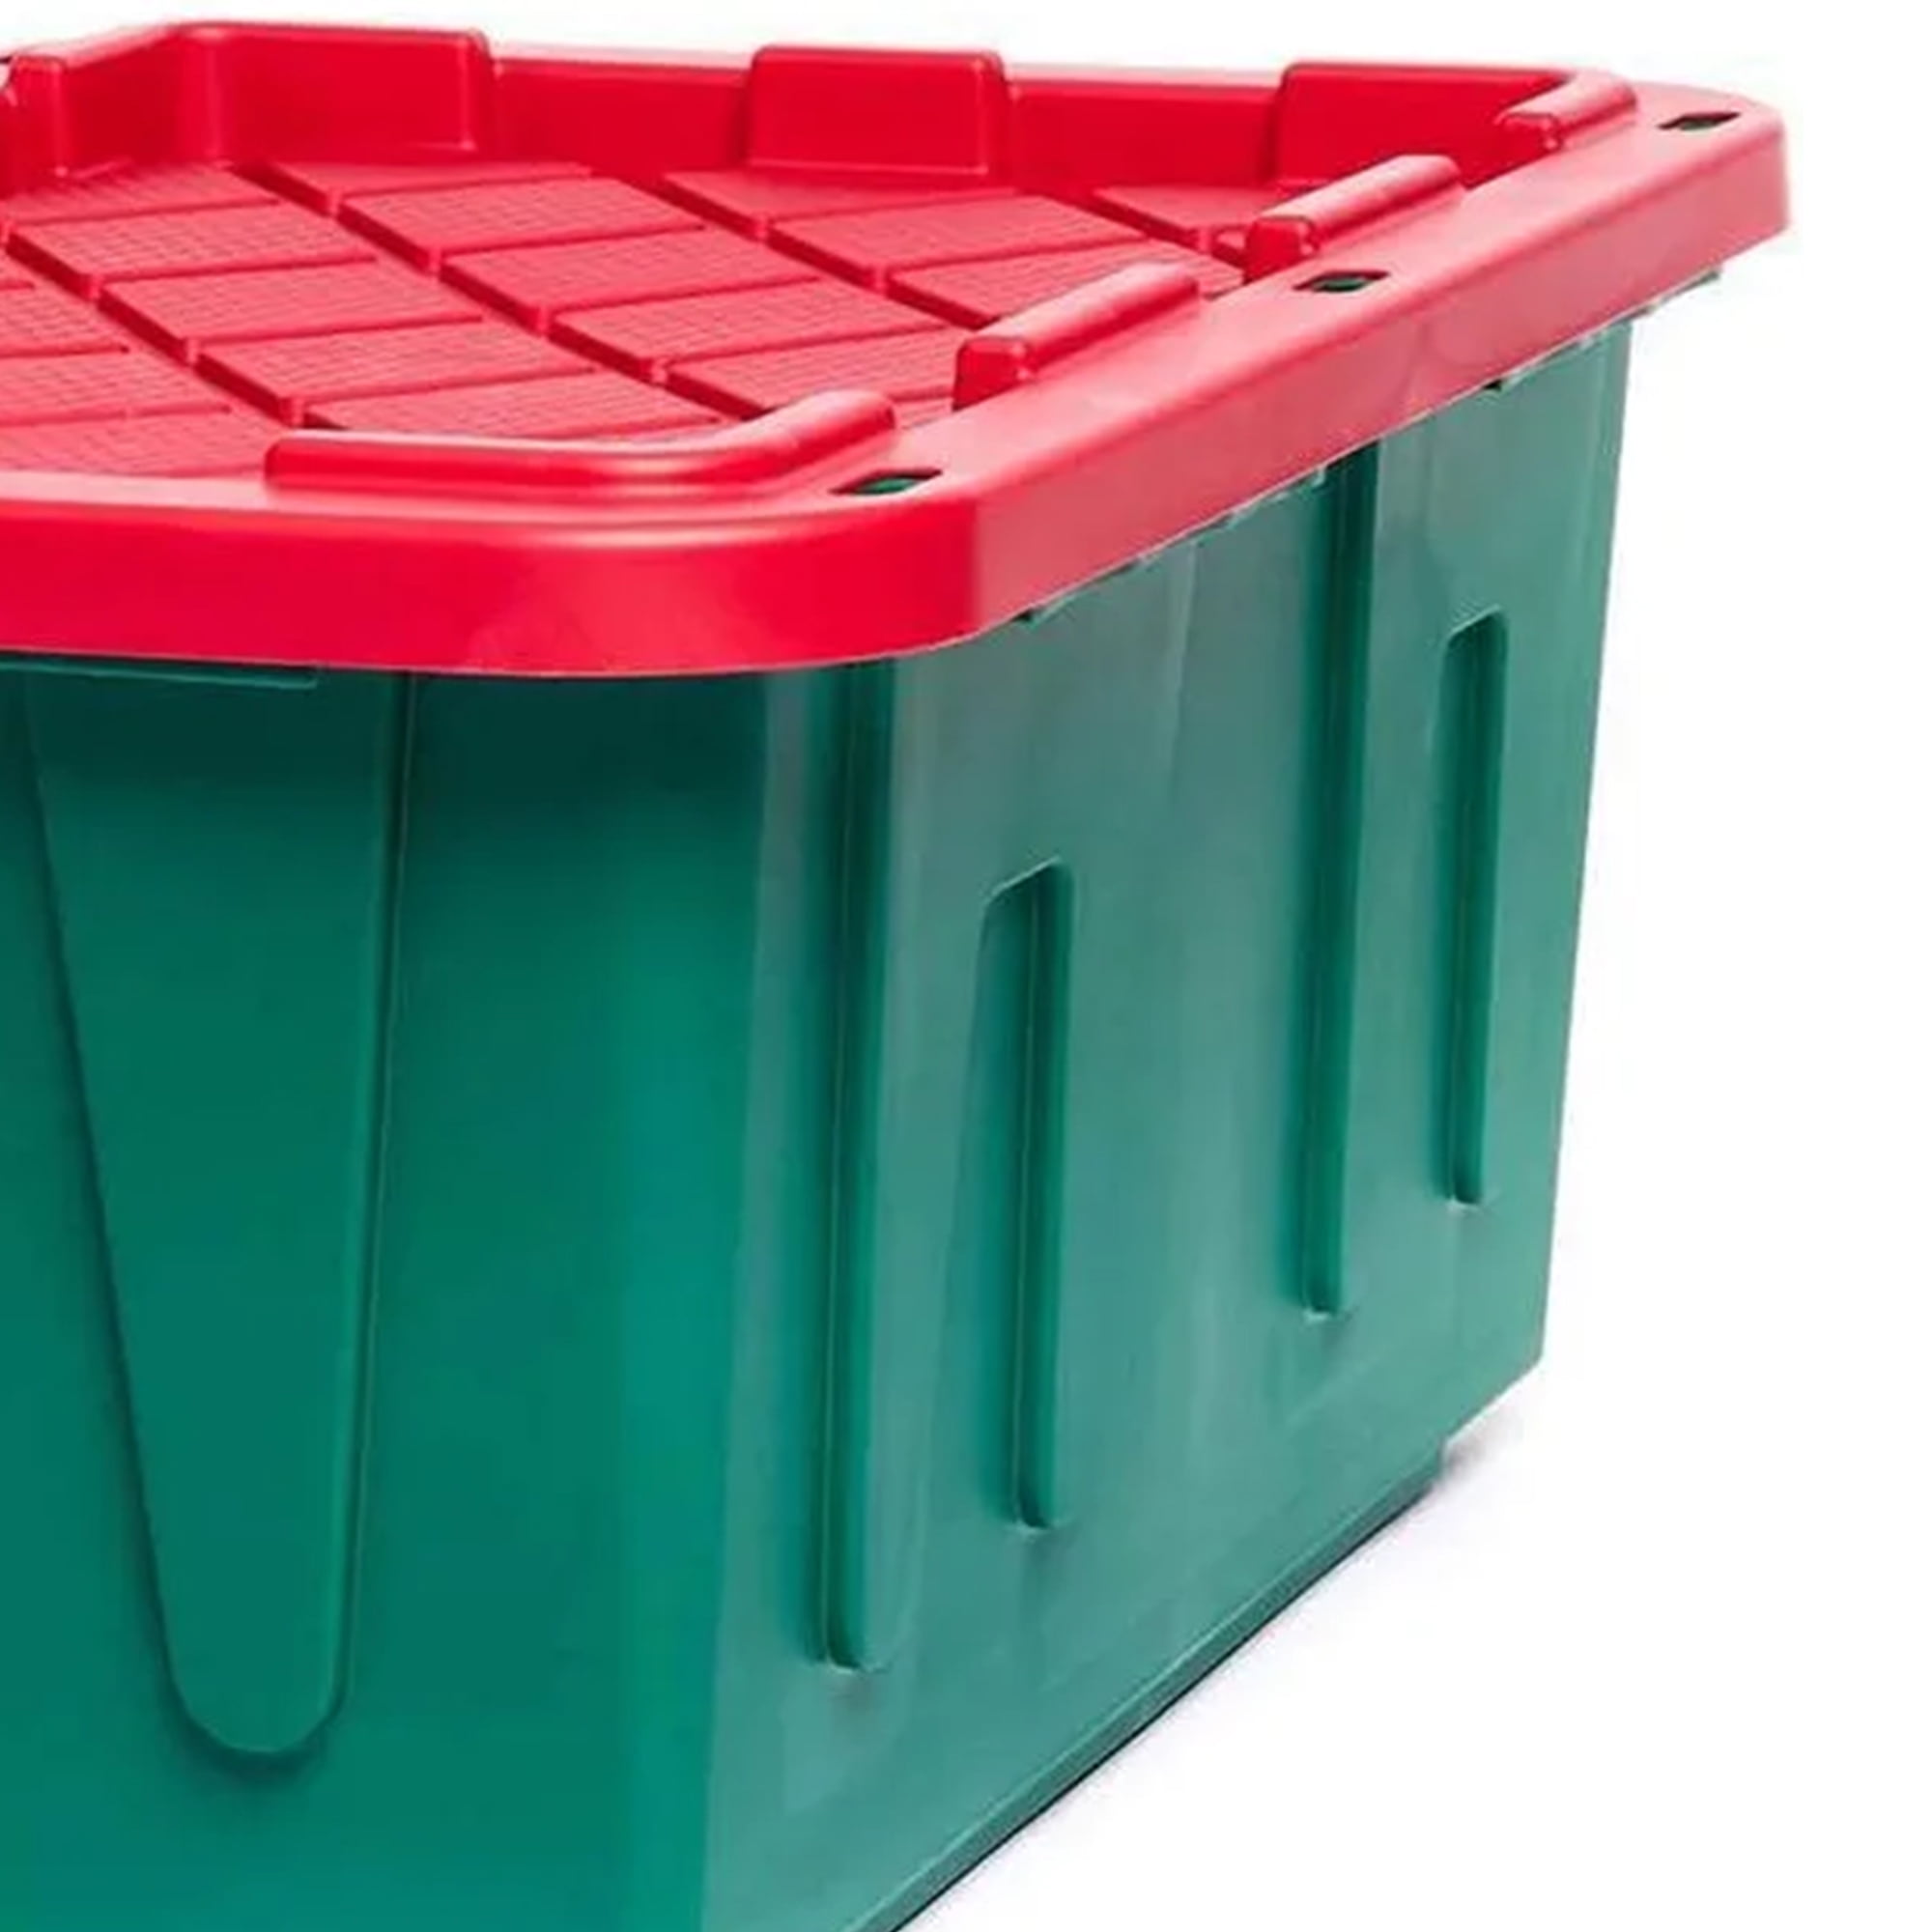 HOMZ Durabilt 15 Gallon Heavy Duty Holiday Storage Tote, Green/Red (4  Pack), 1 Piece - Harris Teeter